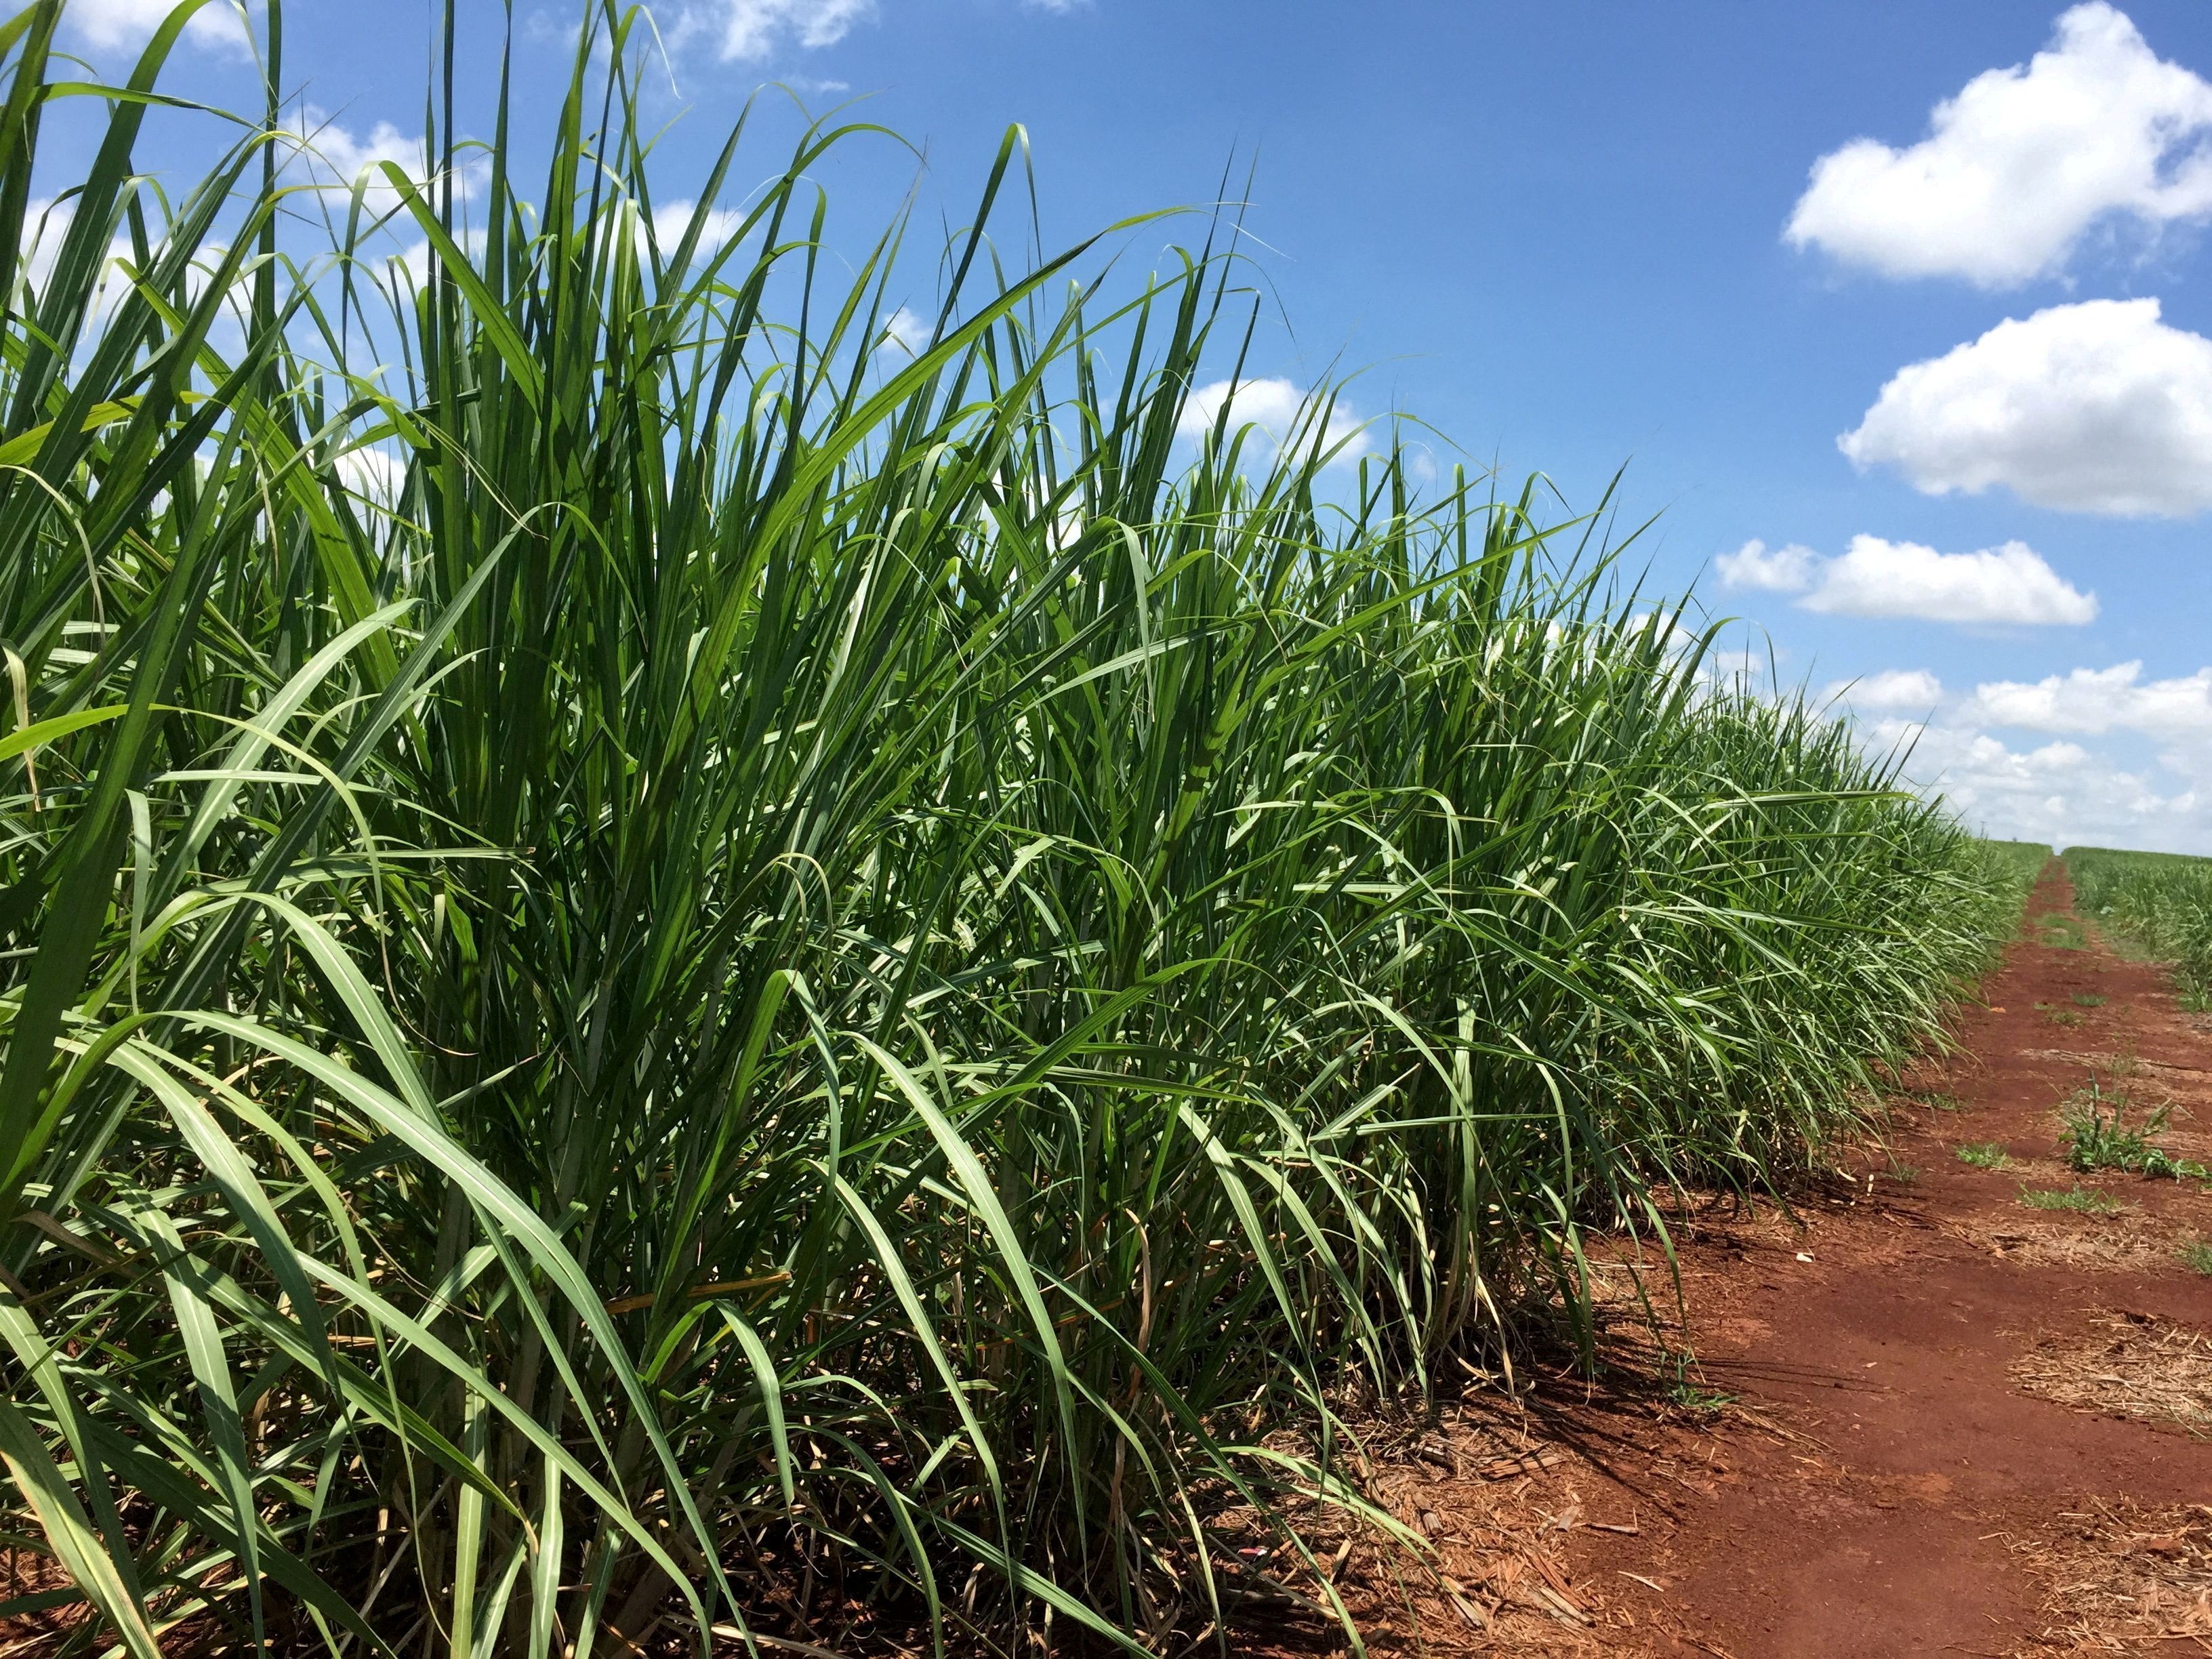 Sugarcane field in development stage is seen at a farm in Jacarezinho